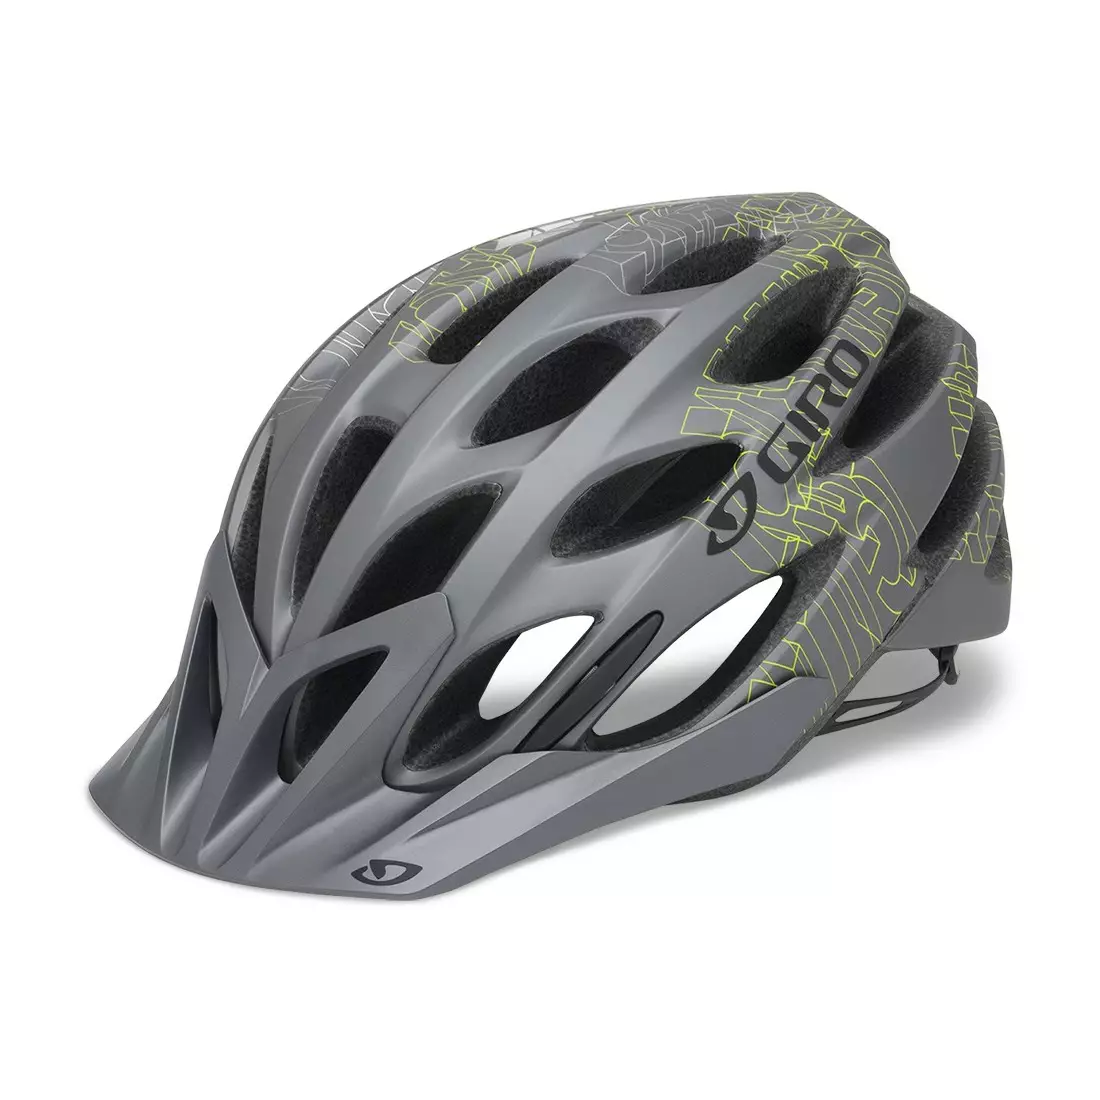 GIRO PHASE - bicycle helmet, titanium / yellow graphics